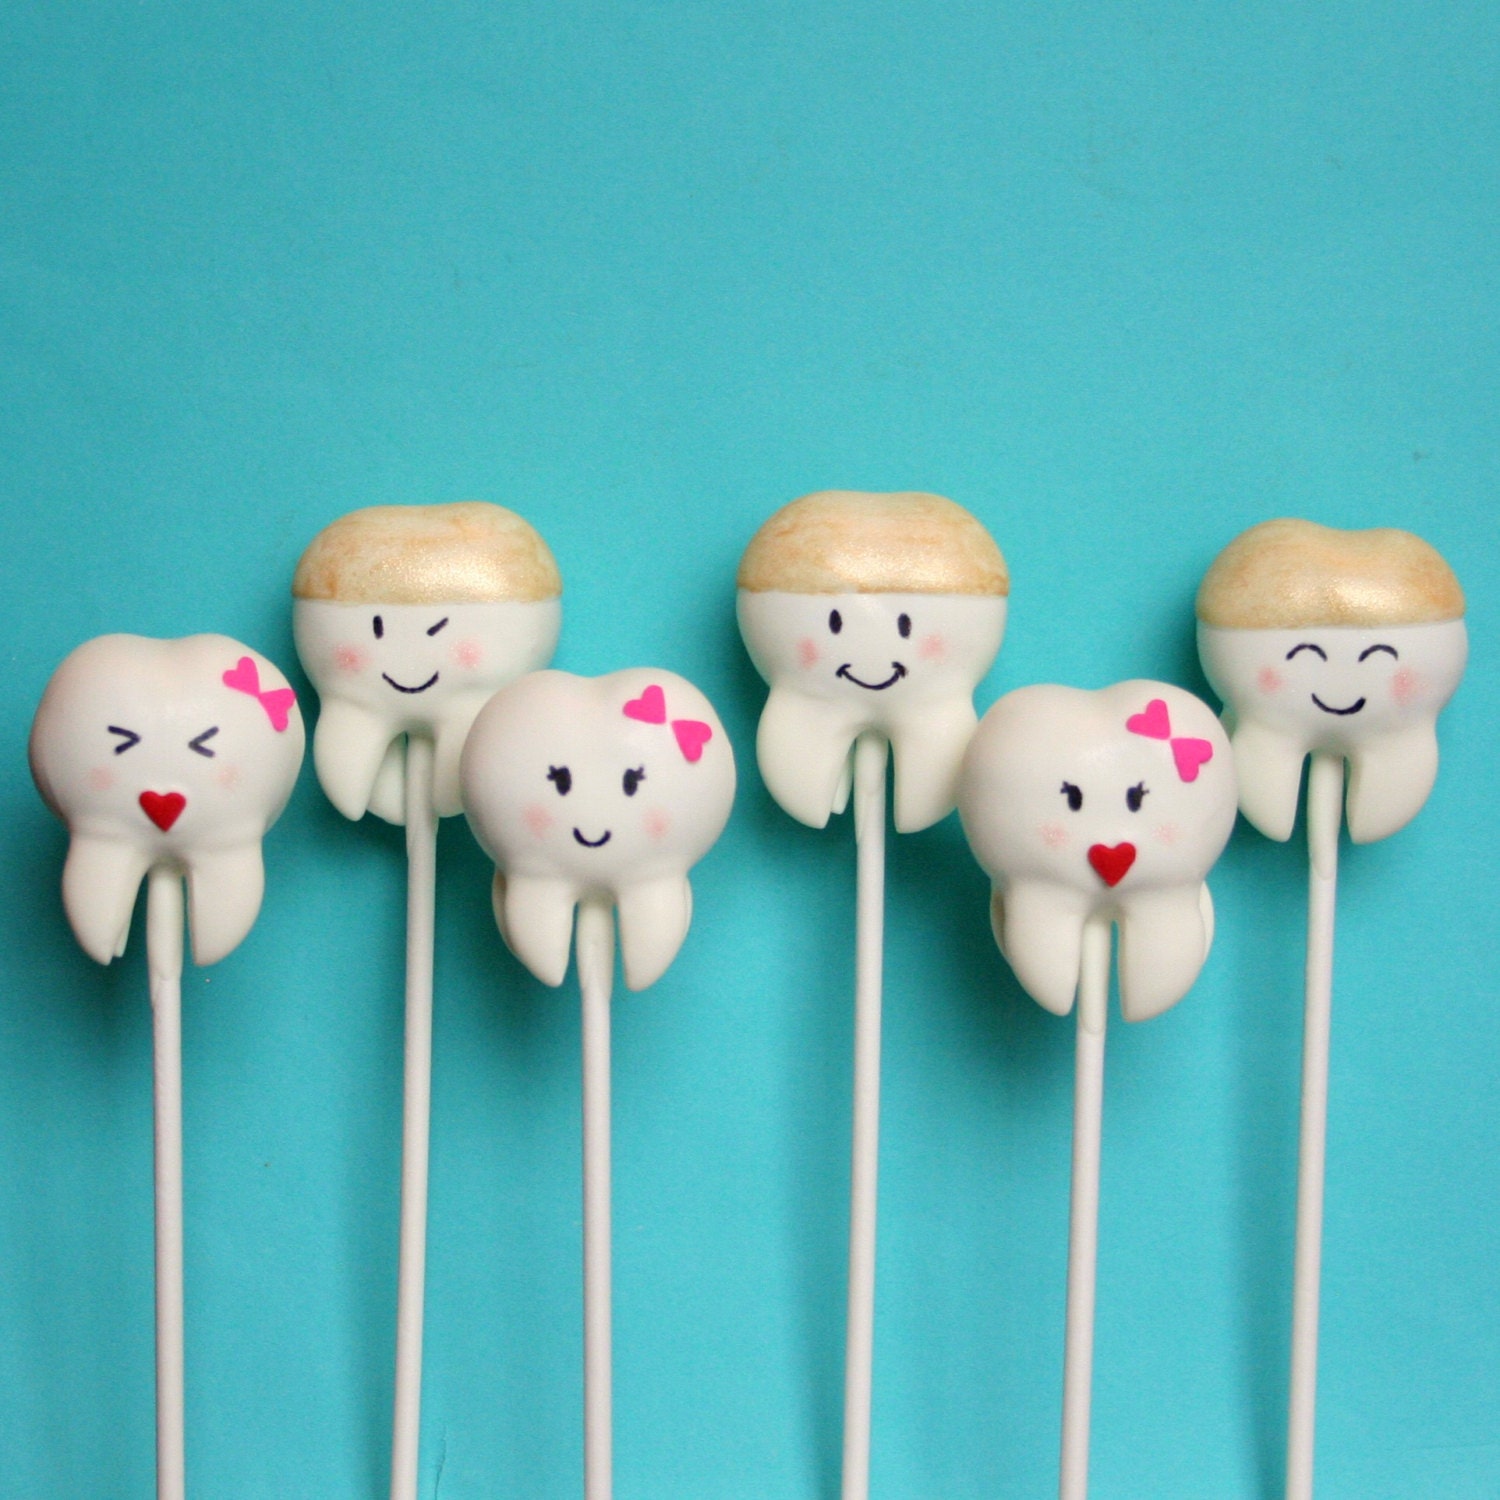 12 Sweet Teeth Cake Pops for Tooth Fairy, Dentist, Dental Hygienist, Graduation Party favor, Birthday gift